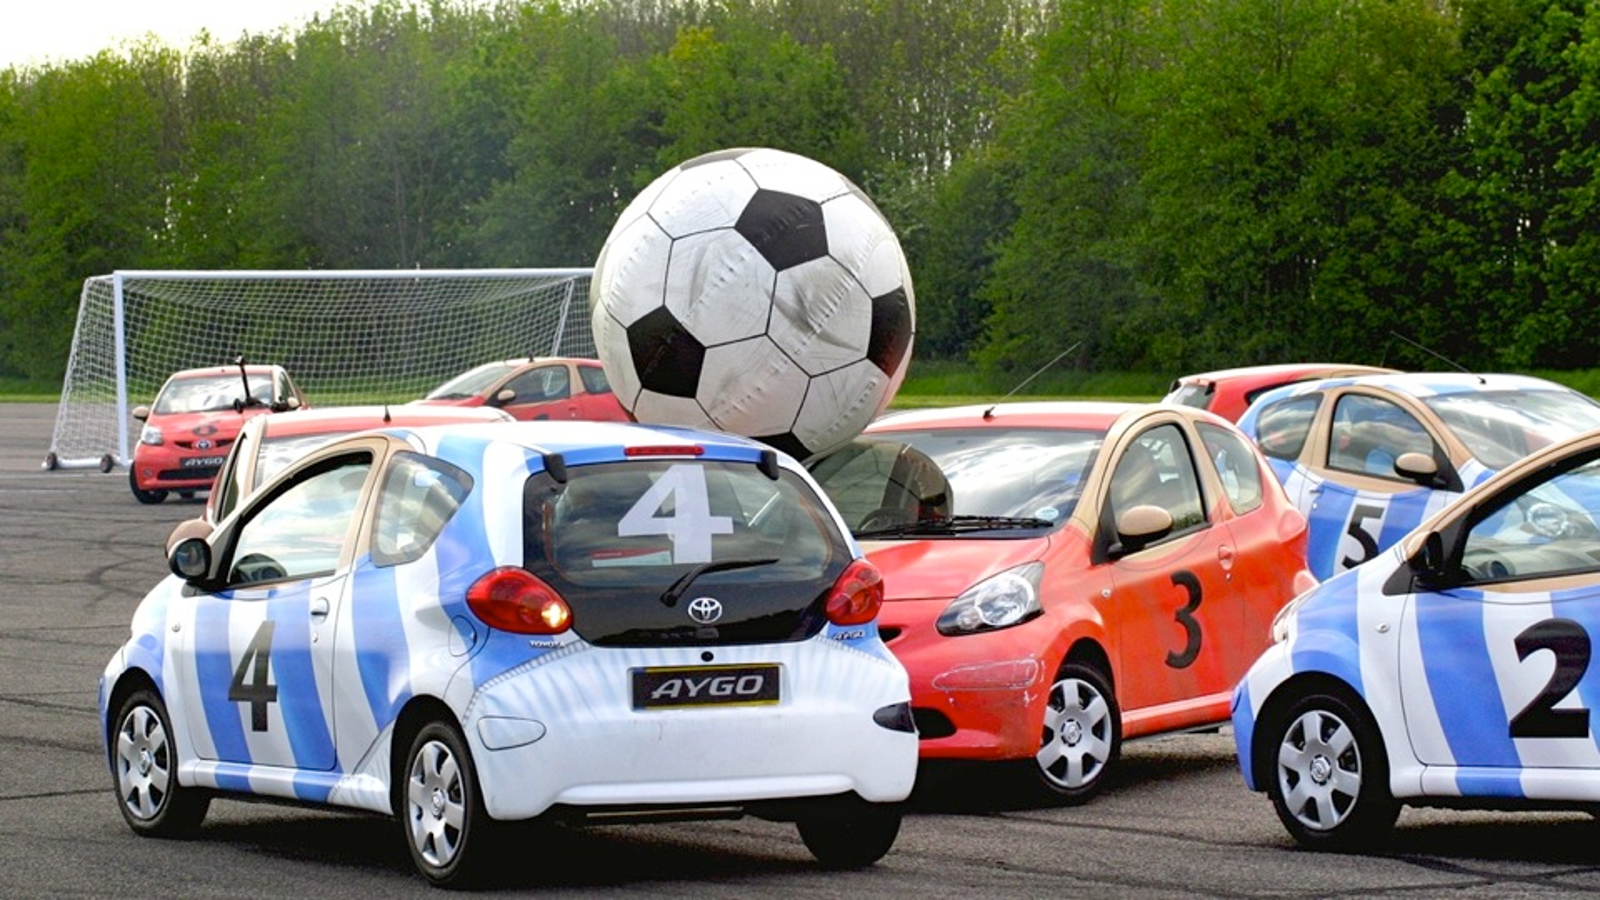 soccer car game